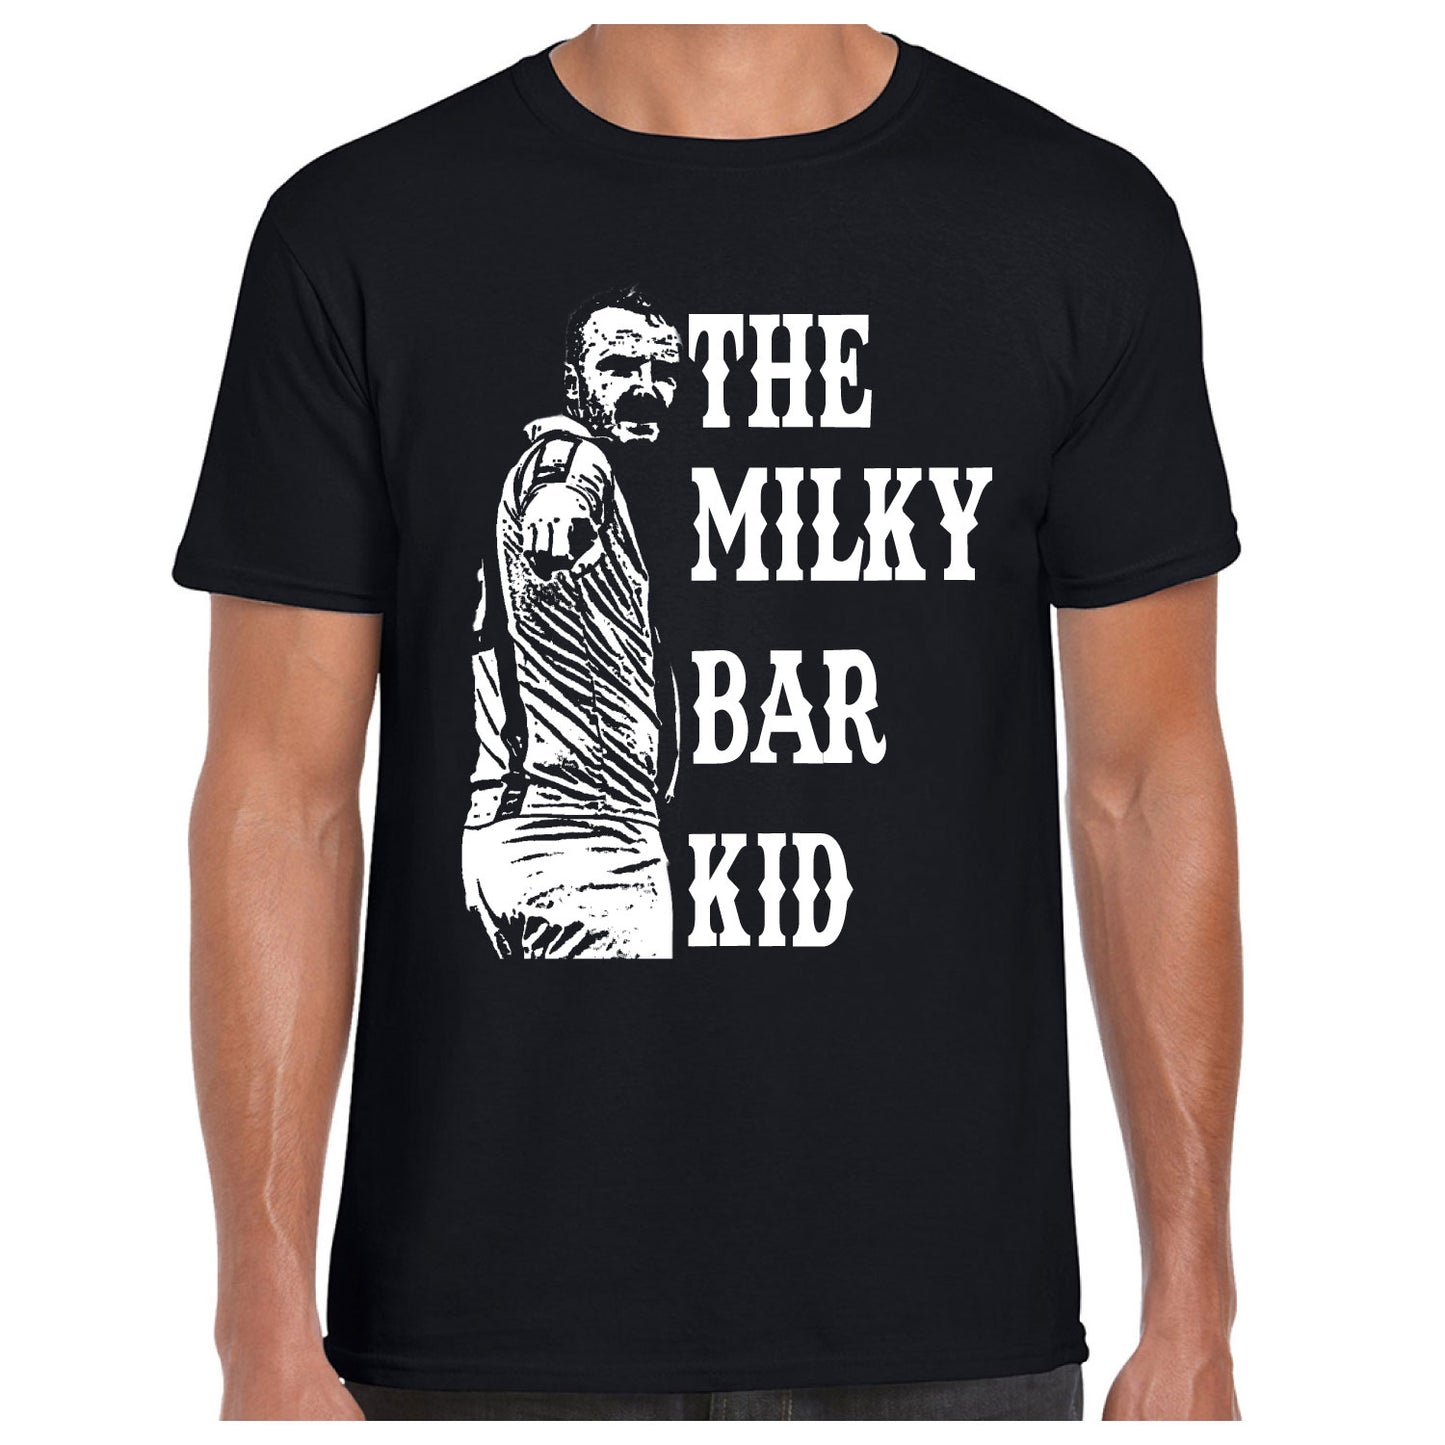 Malvern Town Football Club Milky Bar Kid T-Shirt